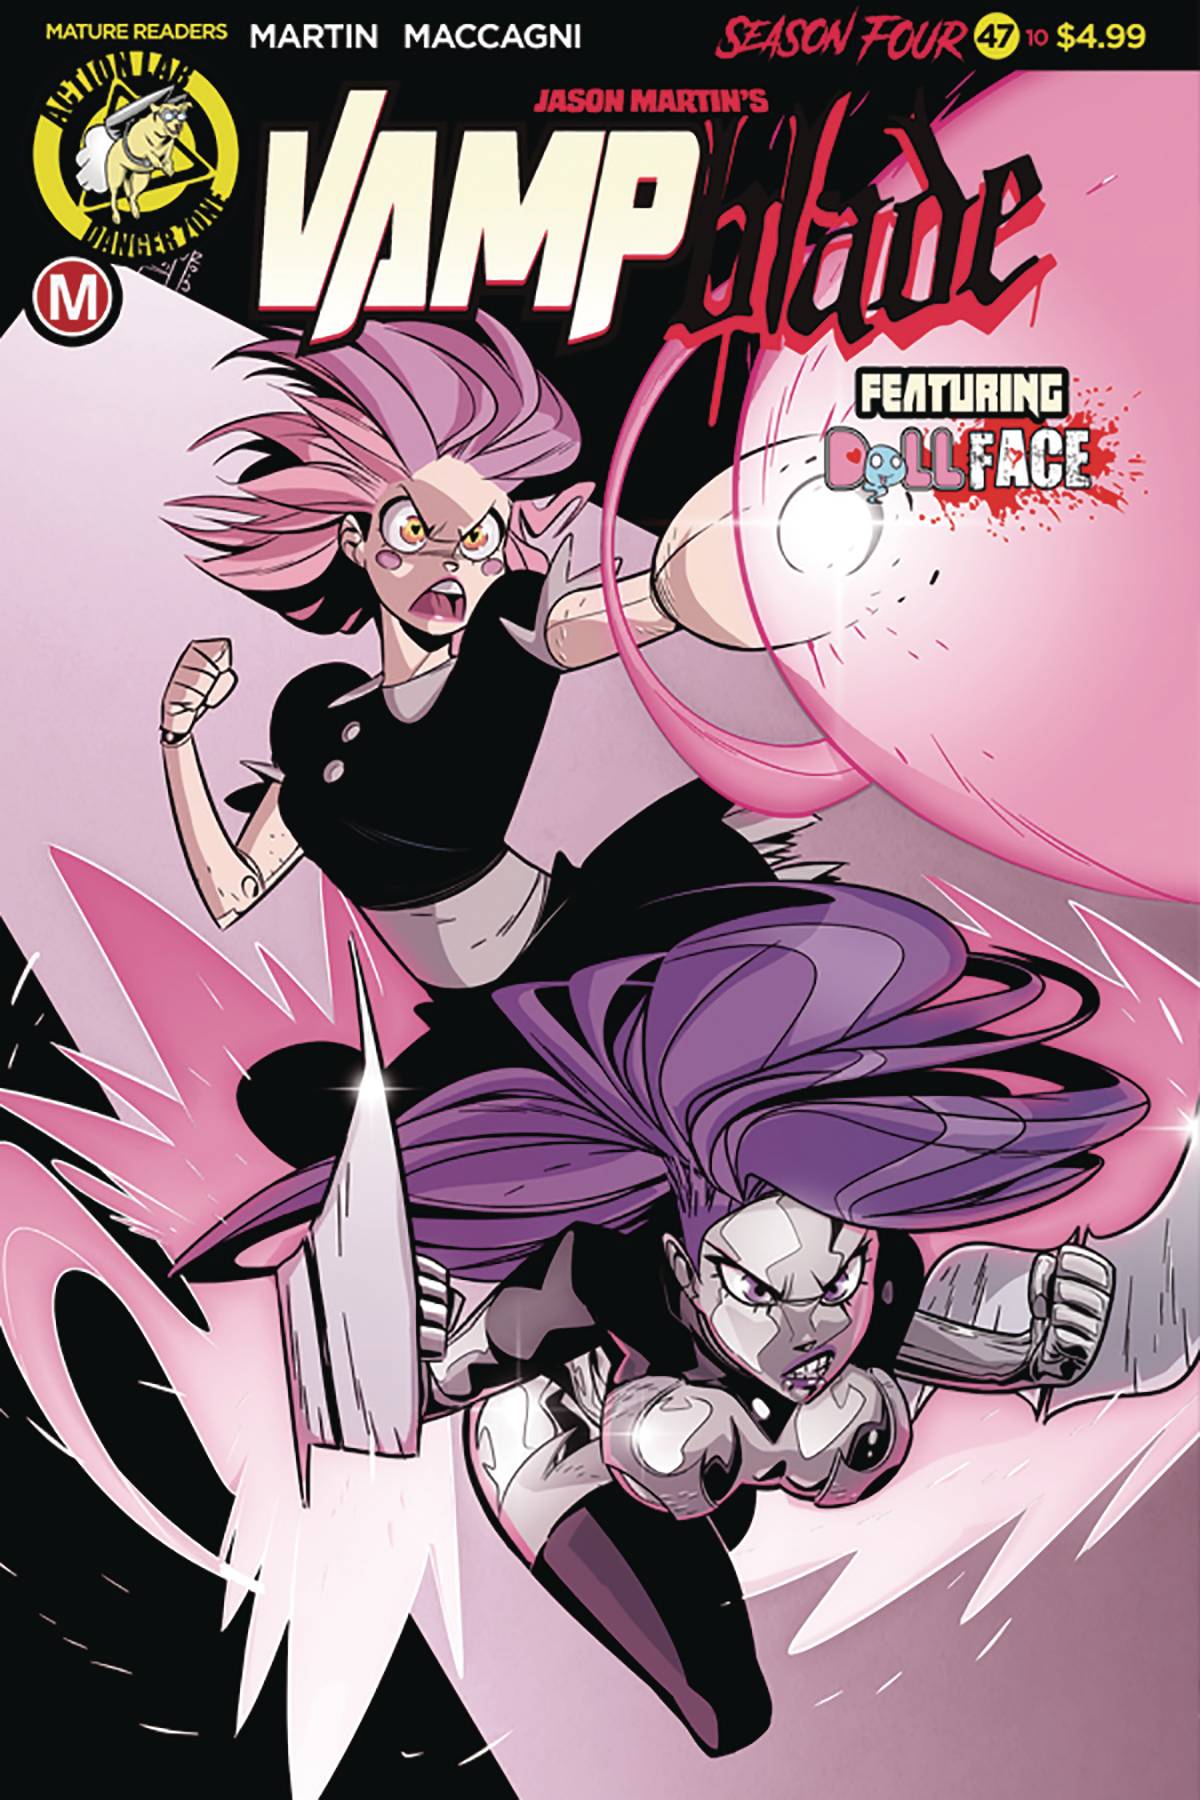 Vampblade Season 4 #10 (2020)